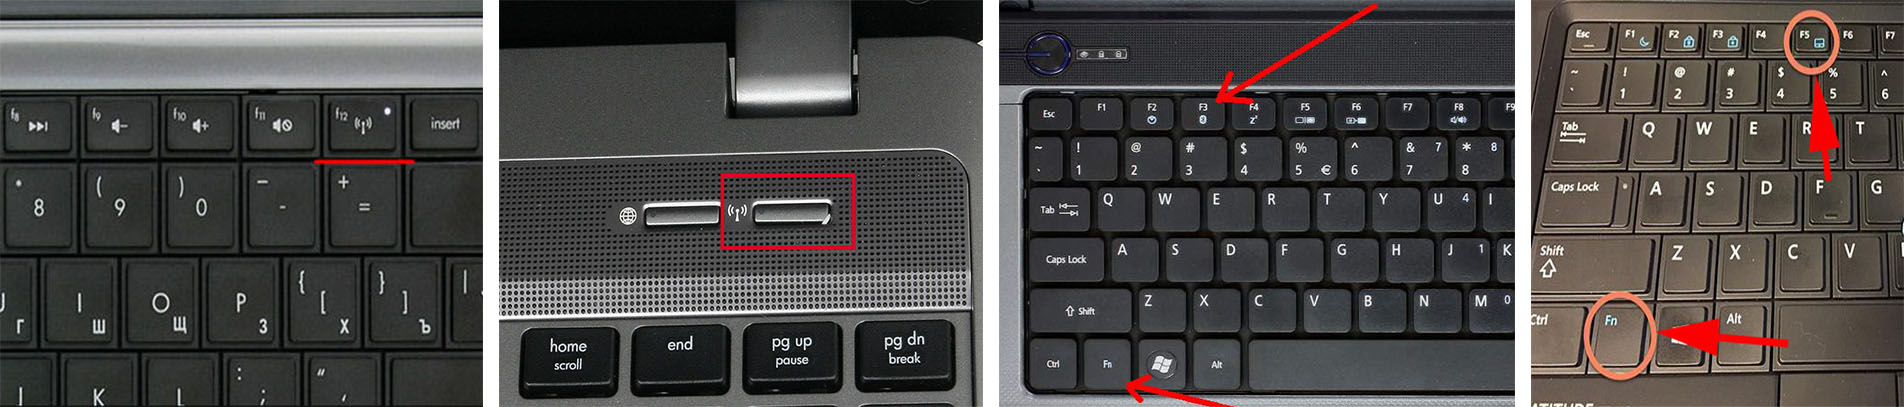 Подключись к ноутбуку леново. Как подключить Wi-Fi на ноутбуке Lenovo. Ноутбук леново кнопка включения WIFI. Кнопка вай фай на ноутбуке ASUS. Ноутбук ASUS кнопка включения вай фай.